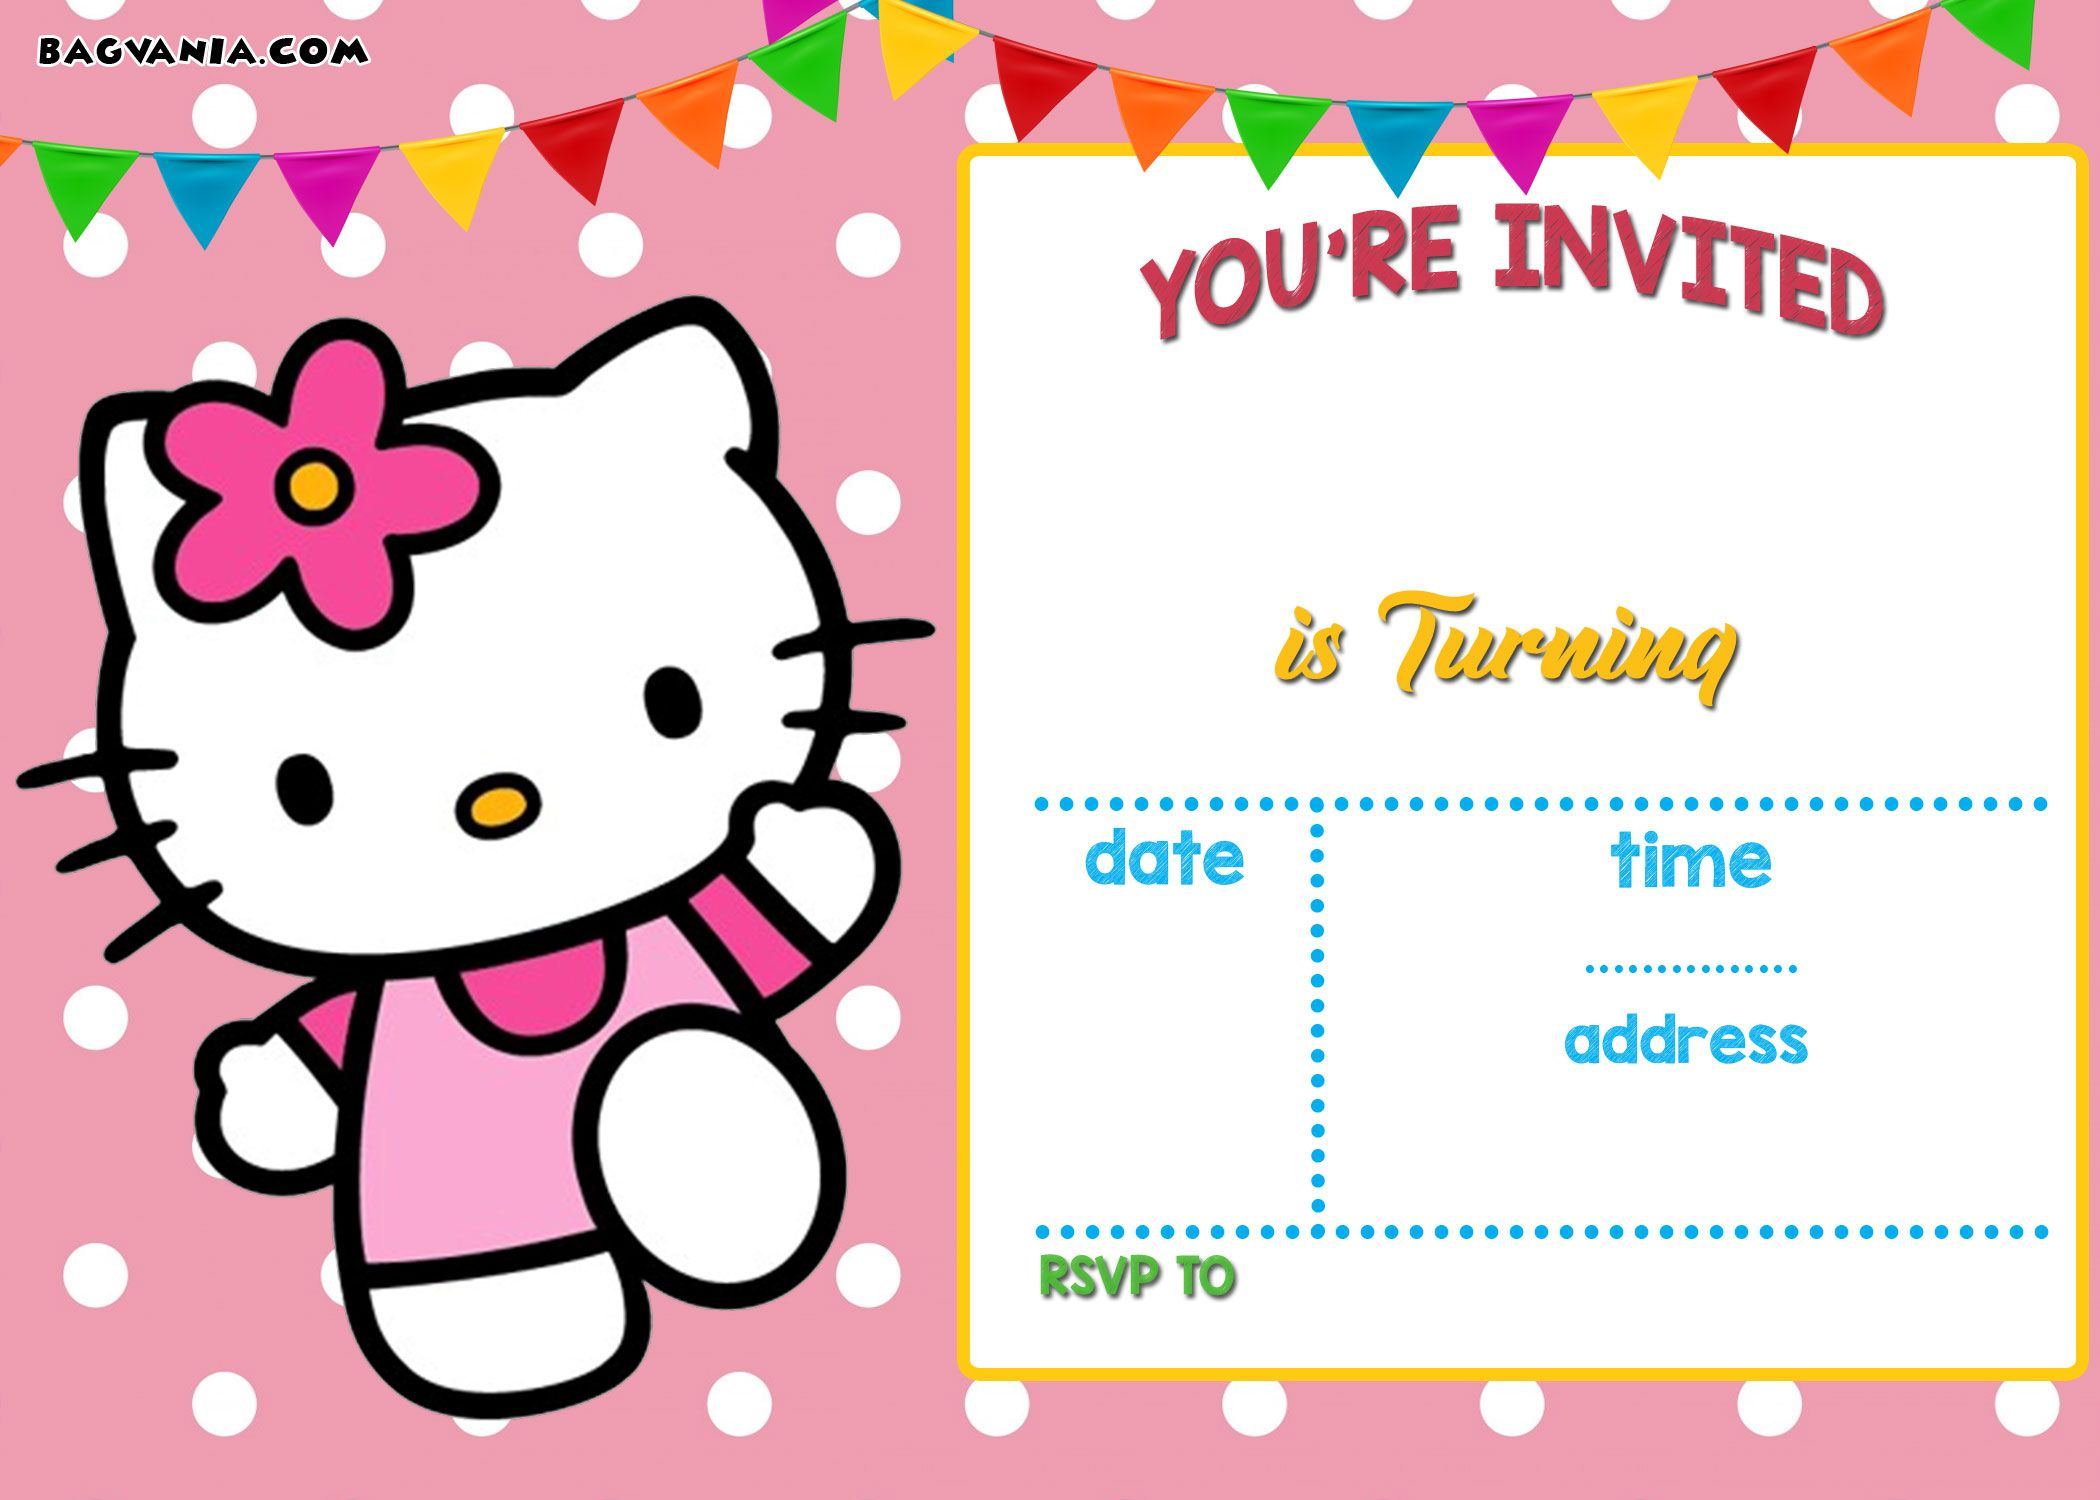 Free Hello Kitty Invitation Free Printable Birthday Invitation inside proportions 2100 X 1500